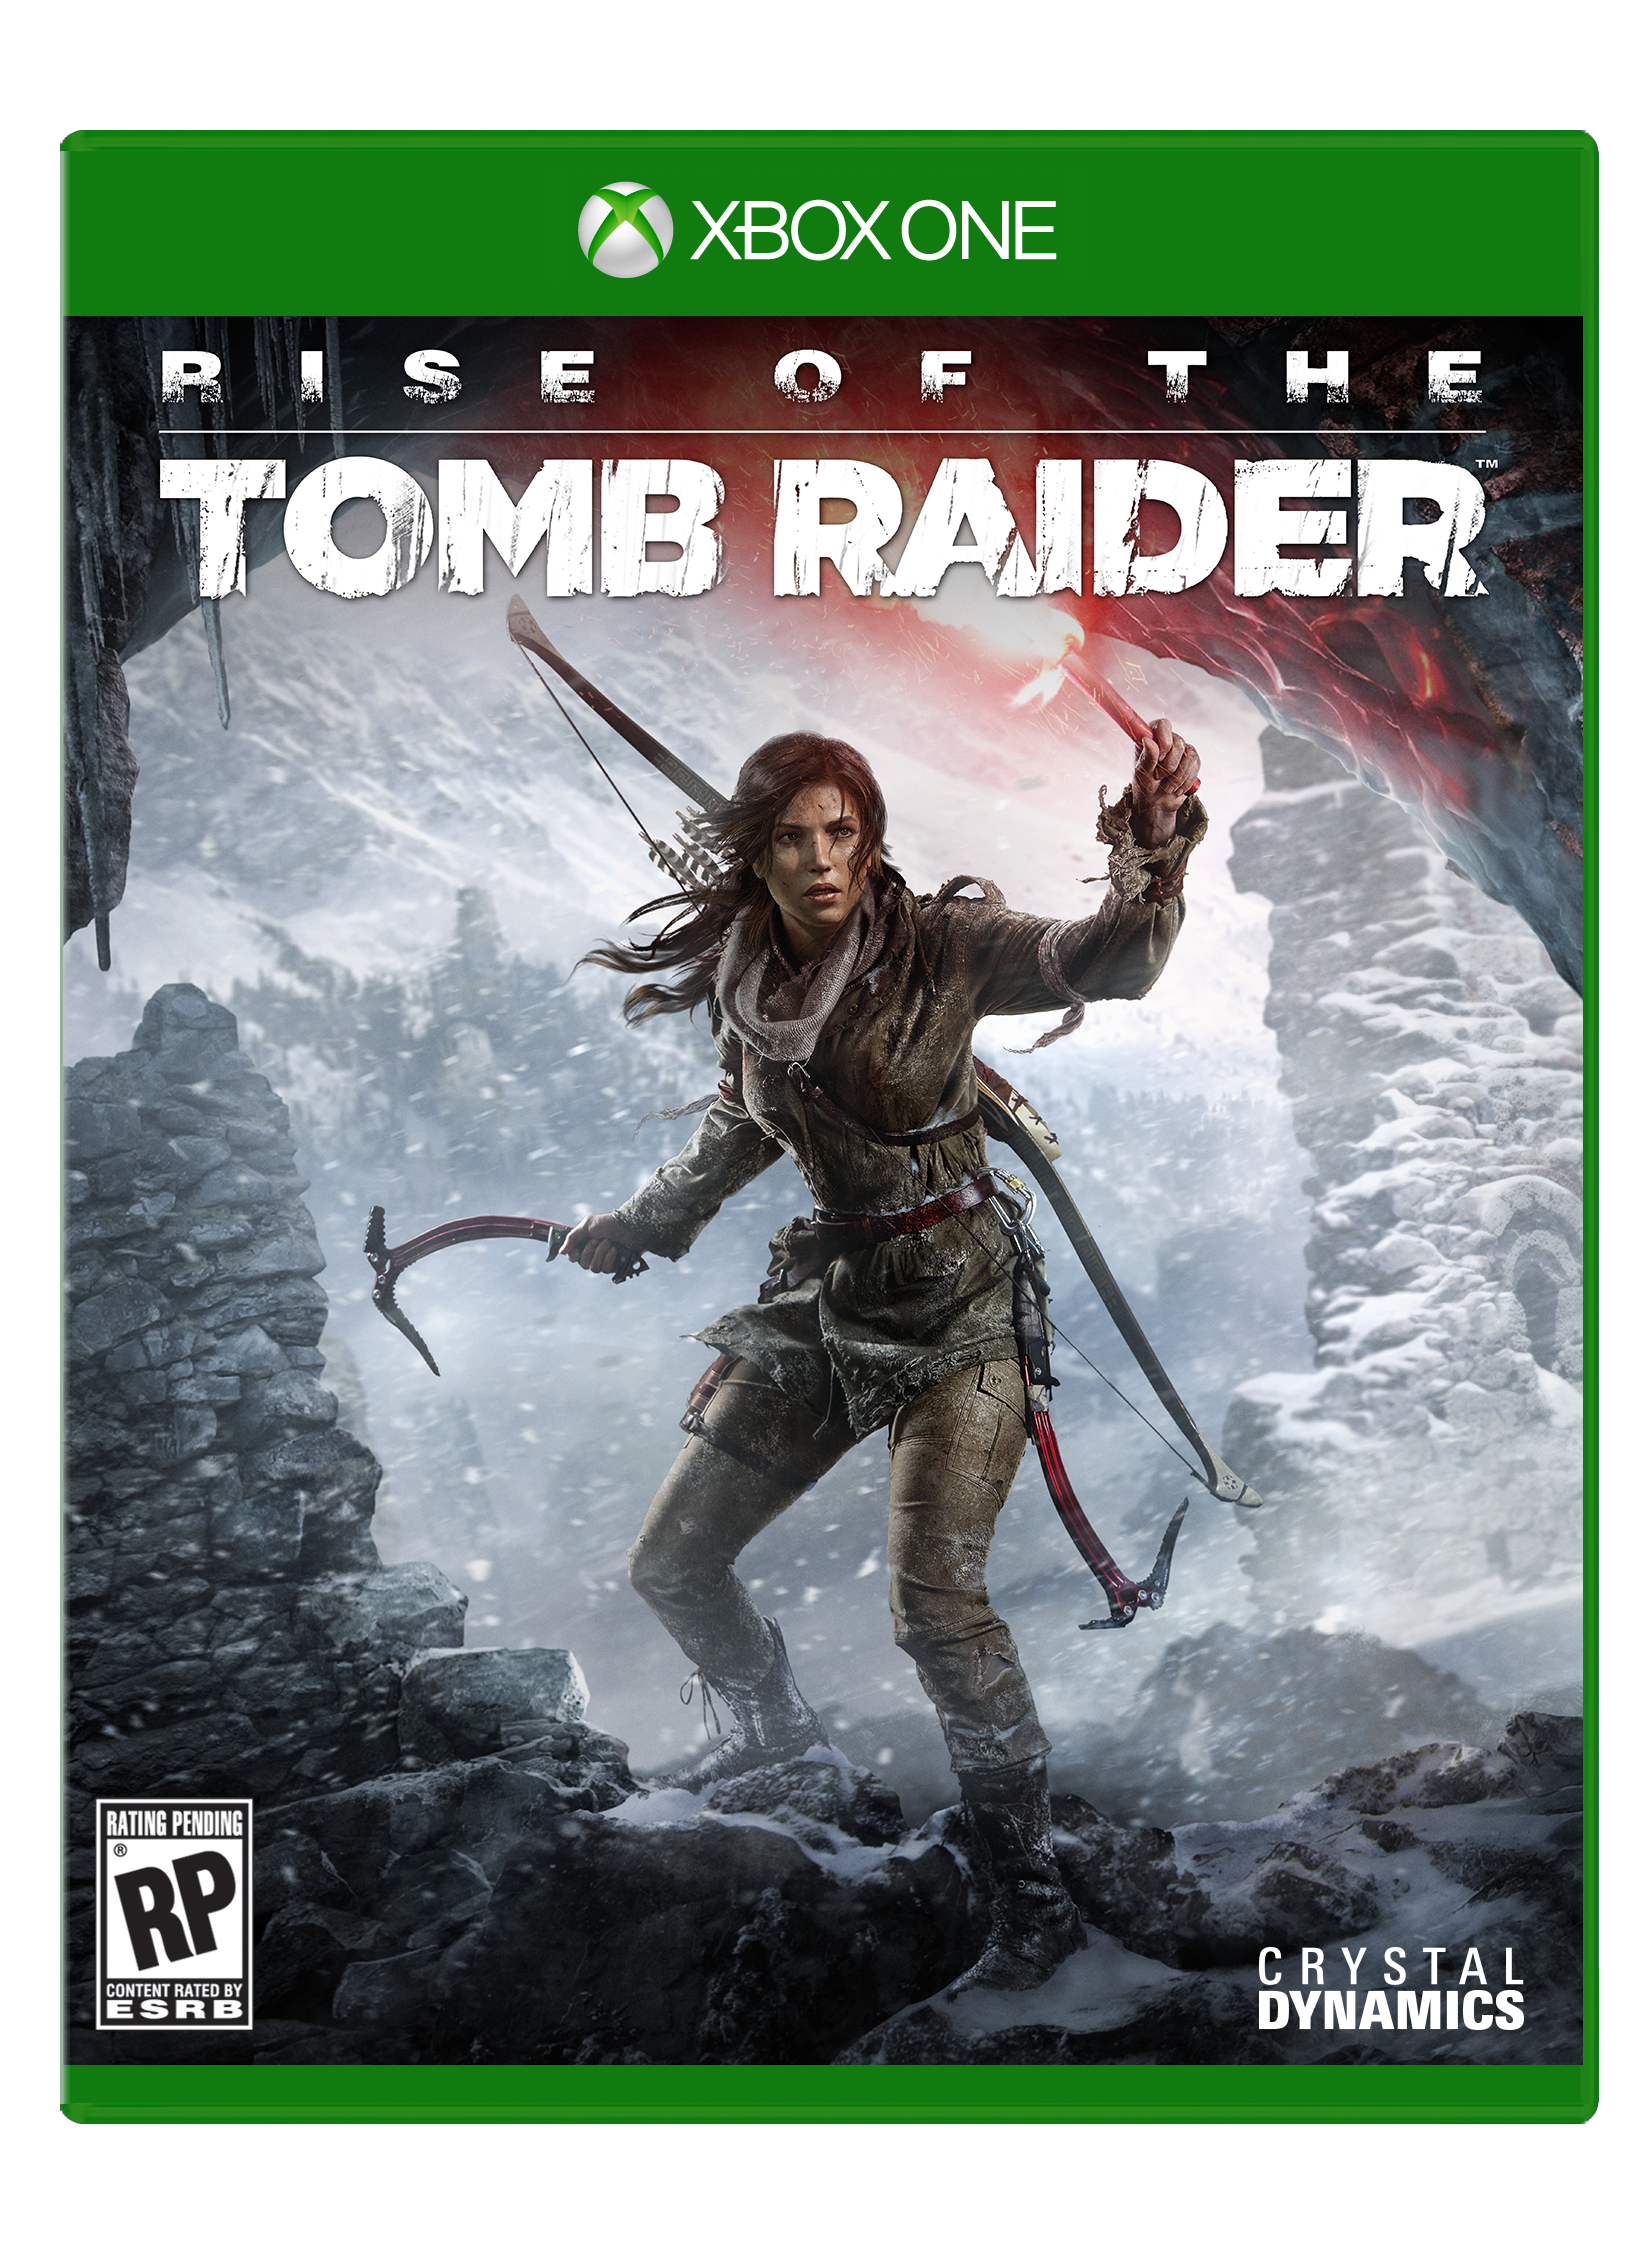 Tomb Raider - TRAILER - Any Good Films